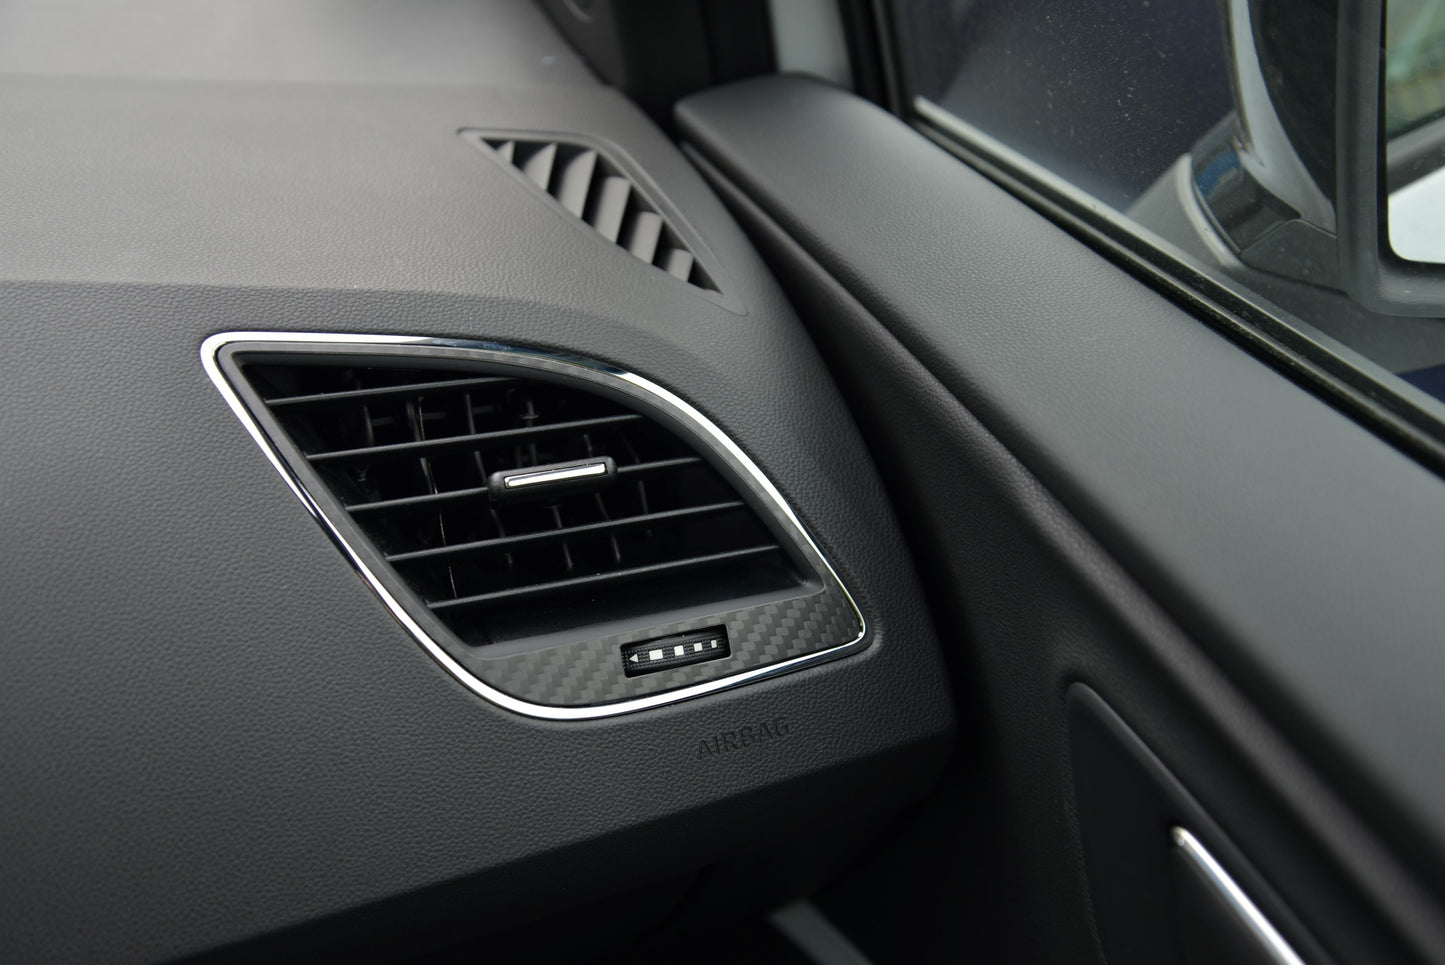 Couvercle Airbag AUDI carbone cuir (Année 2008-2020) – CarCustom3D